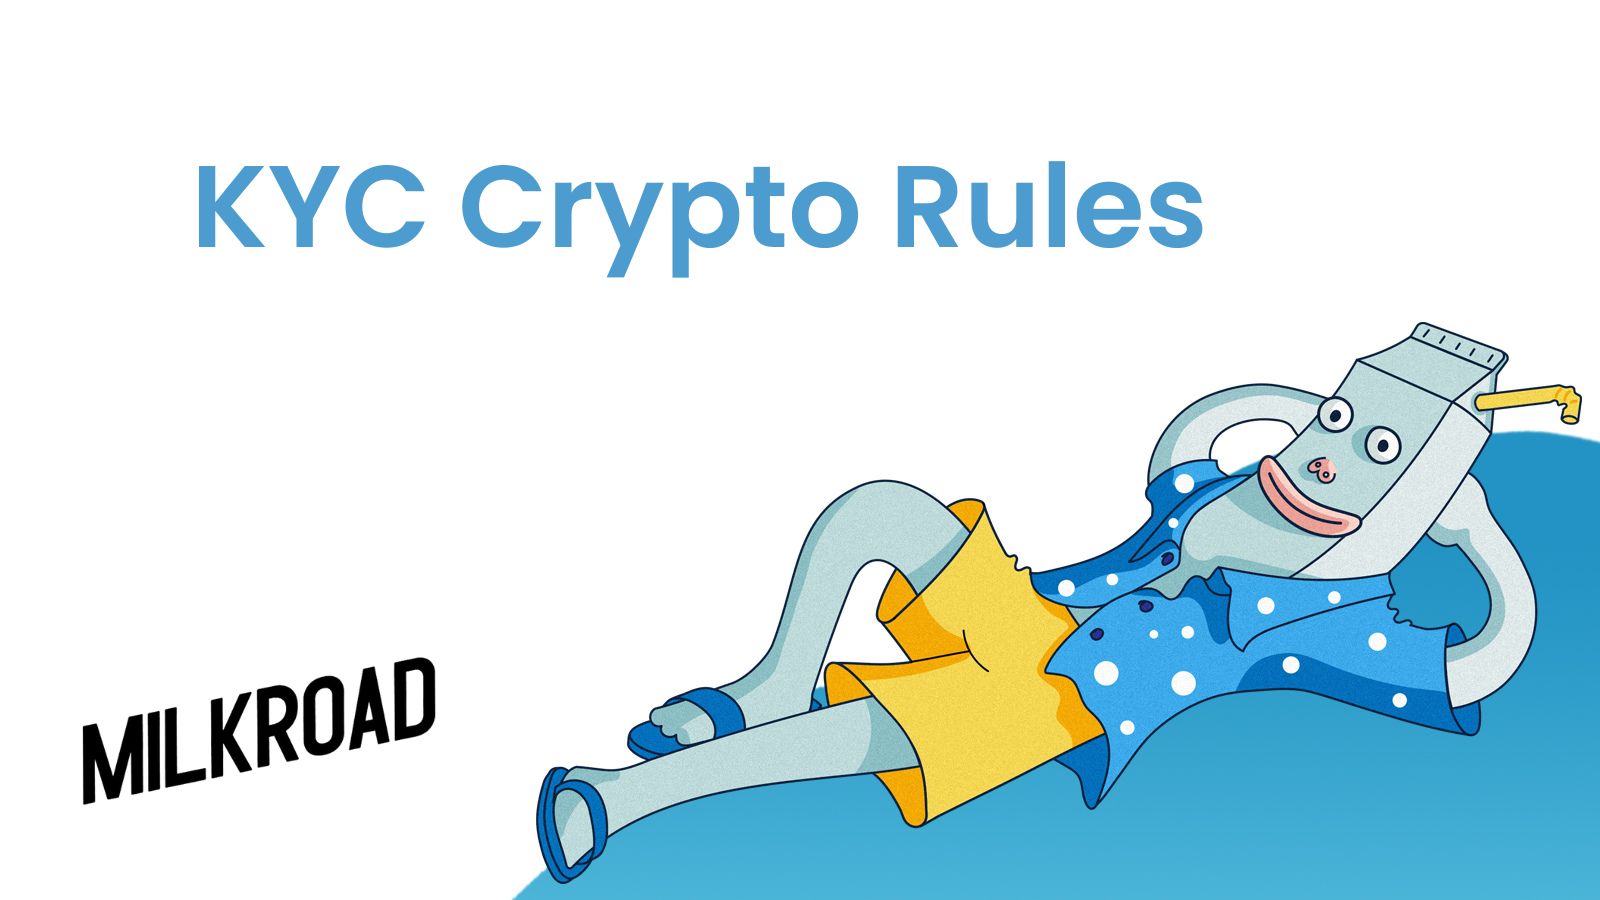 KYC Crypto Rules